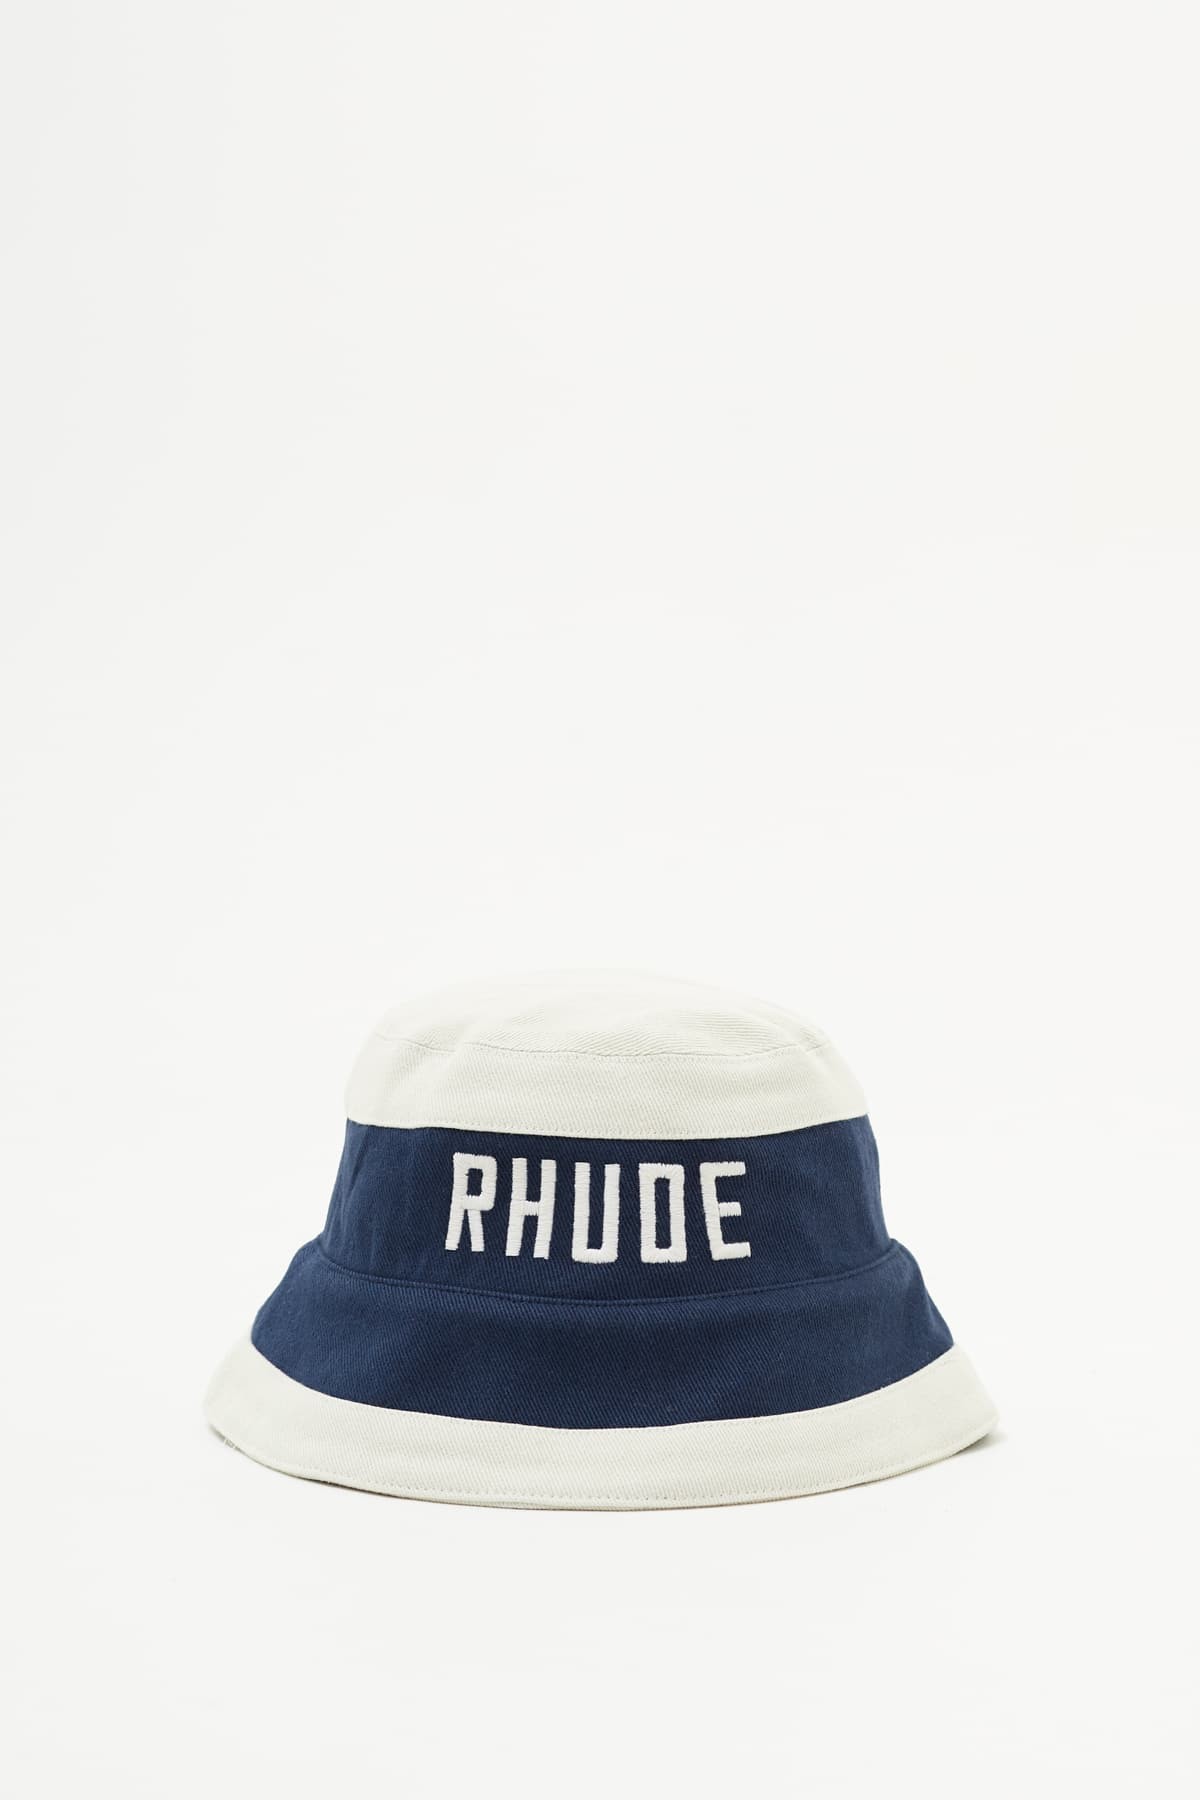 RHUDE MID-NIGHT BLUE CREAM EAST HAMPTON BUCKET HAT IAMNUE